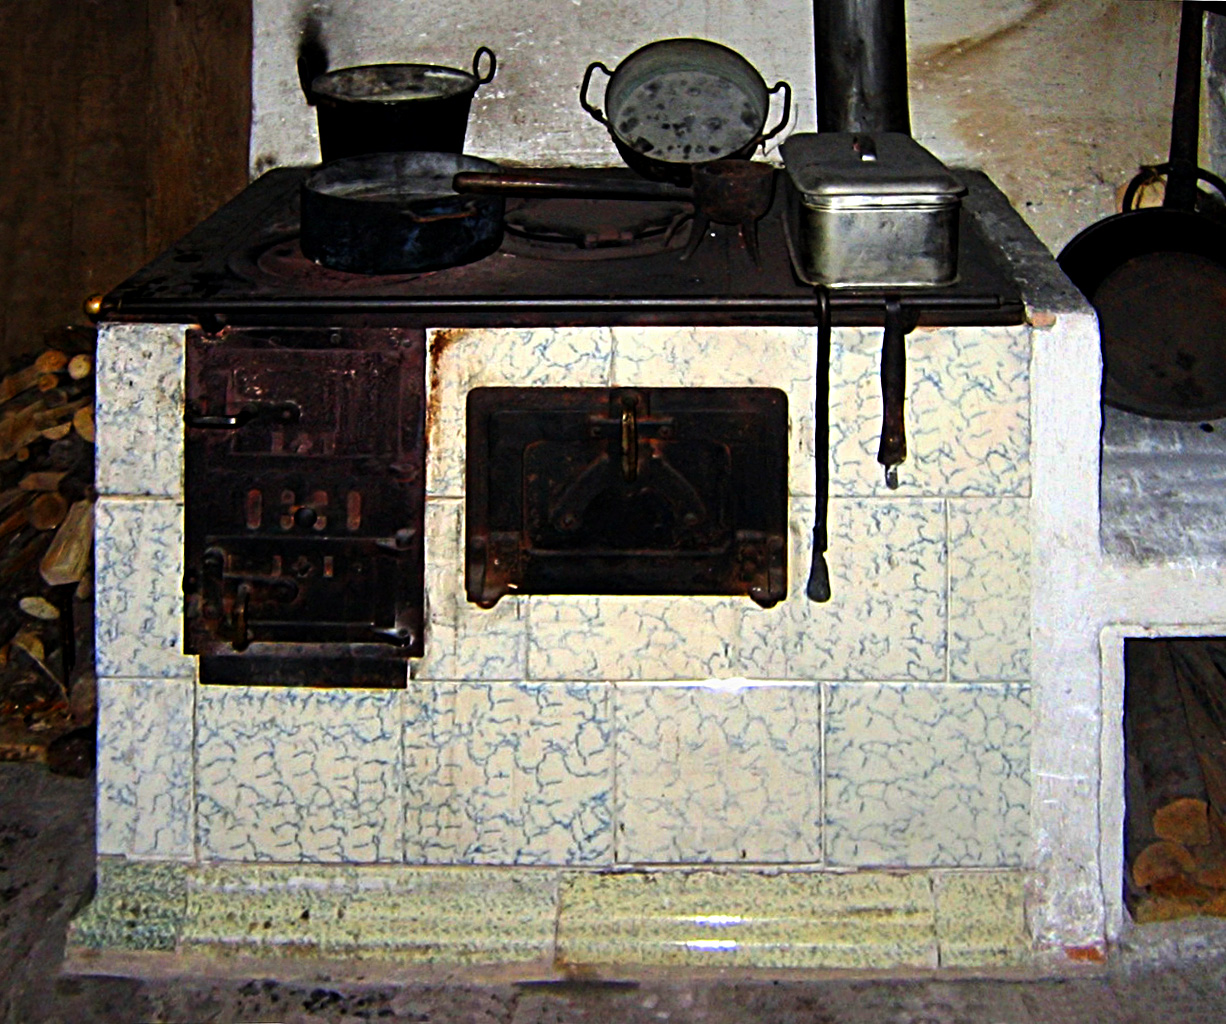 Kultur beginnt mit dem Kochen| © Flominator Quelle: https://commons.wikimedia.org/wiki/File:Noe_stove.jpg#/media/File:Noe_stove.jpg